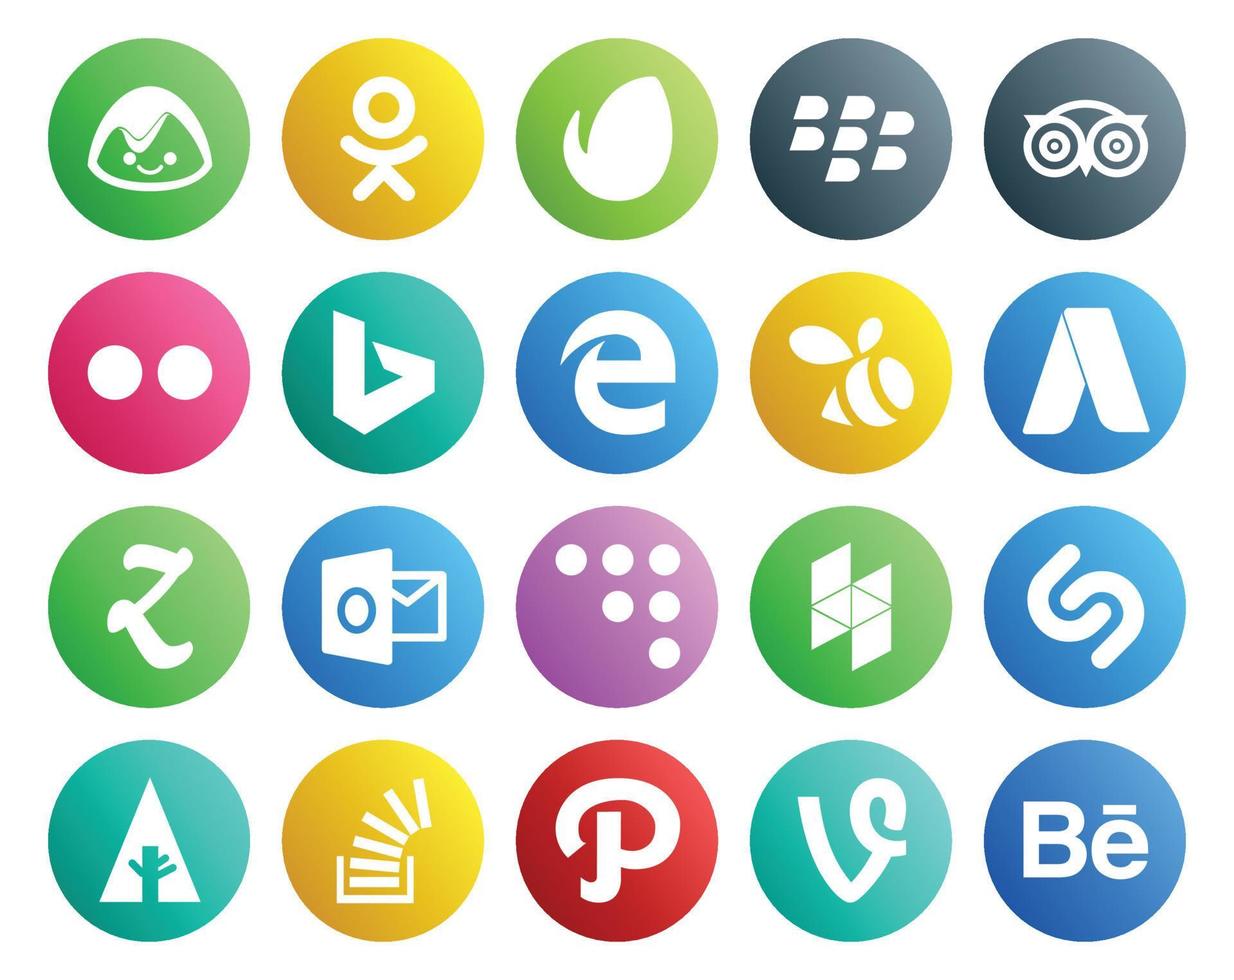 Paquete de 20 íconos de redes sociales que incluye stockoverflow shazam edge houzz Outlook vector